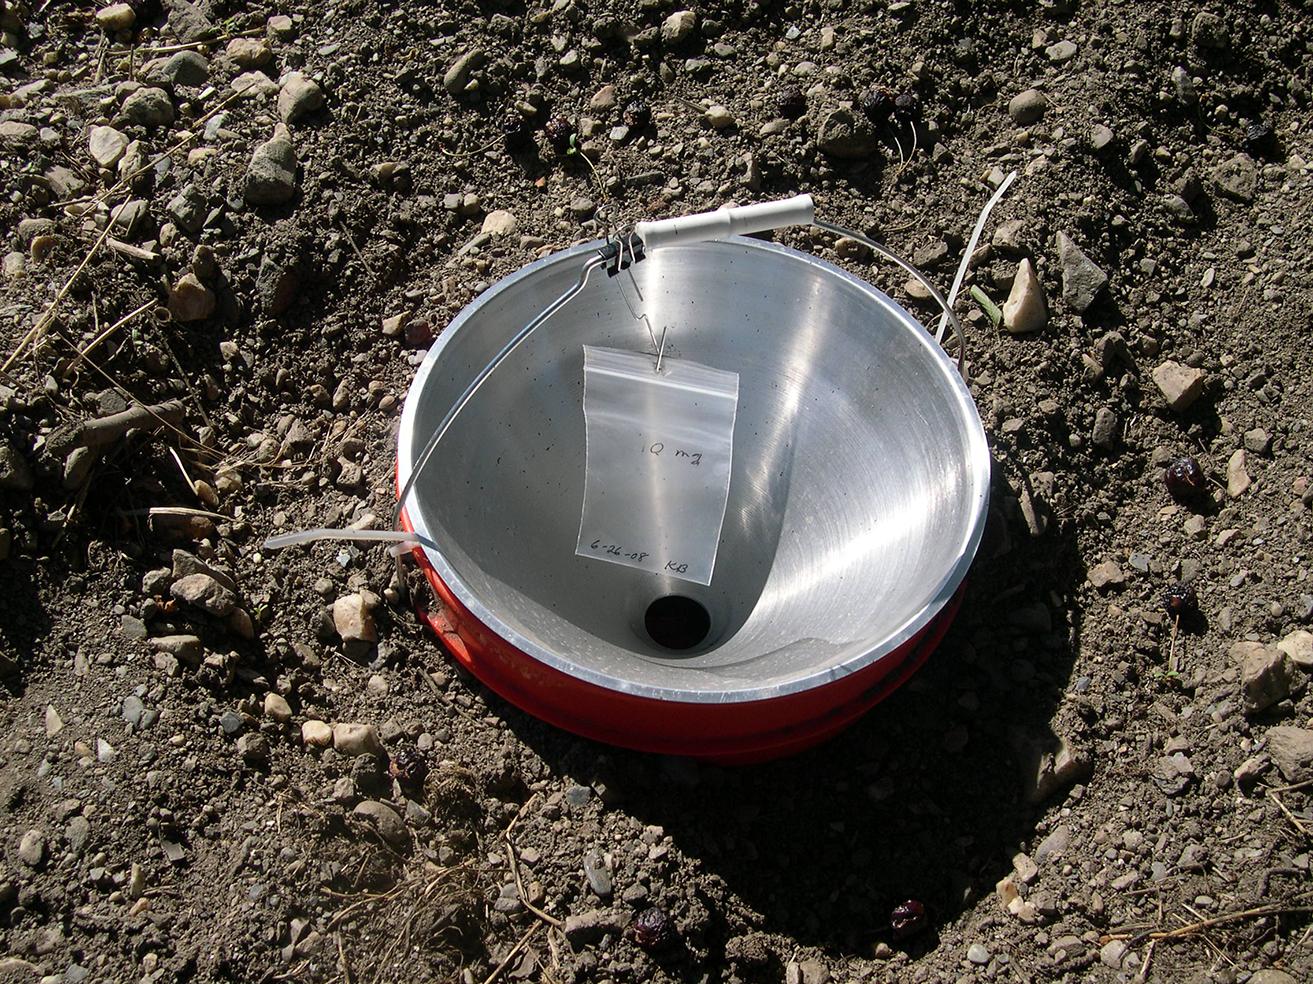 Bucket trap with experimental prionus  pheromone lure.